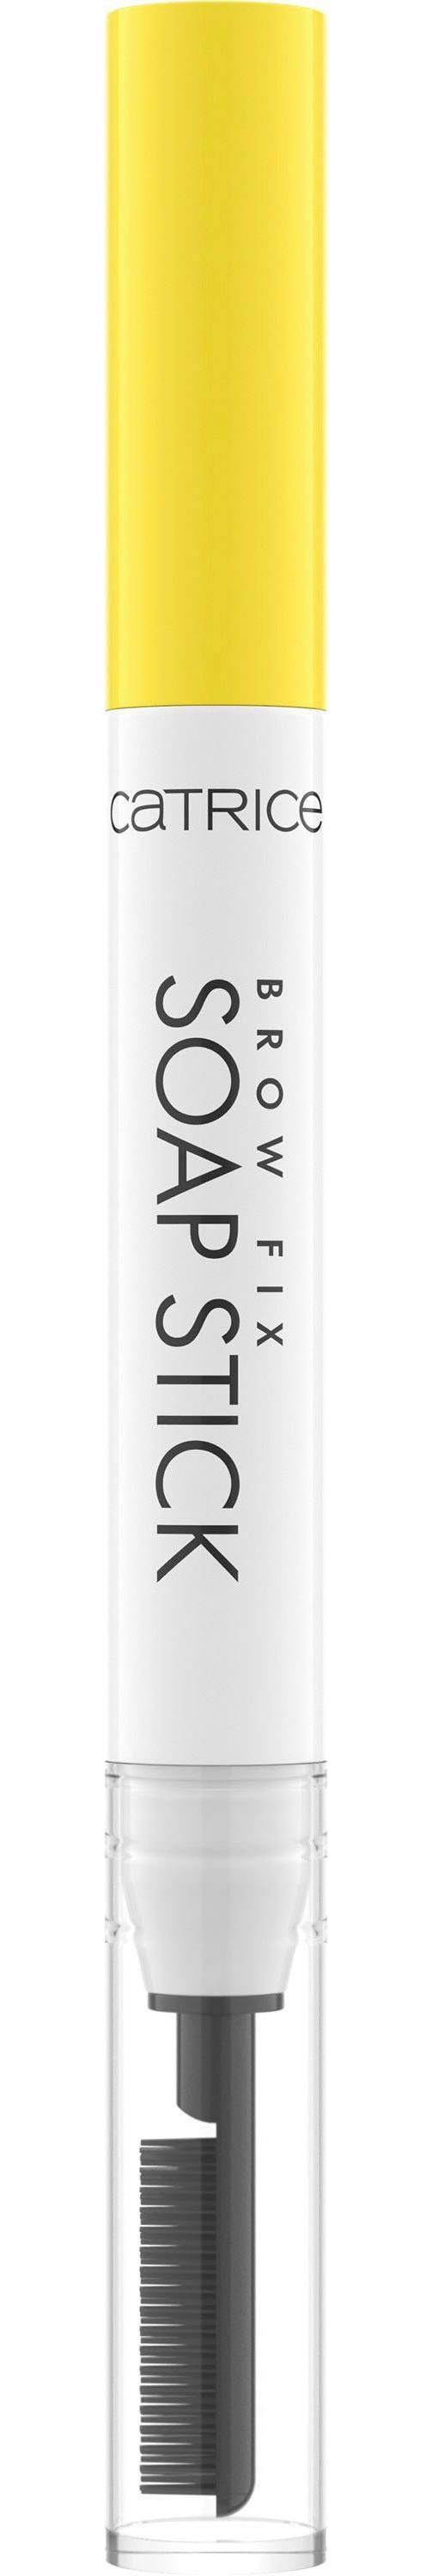 Catrice Augenbrauen-Stift Brow Fix Soap Stick,